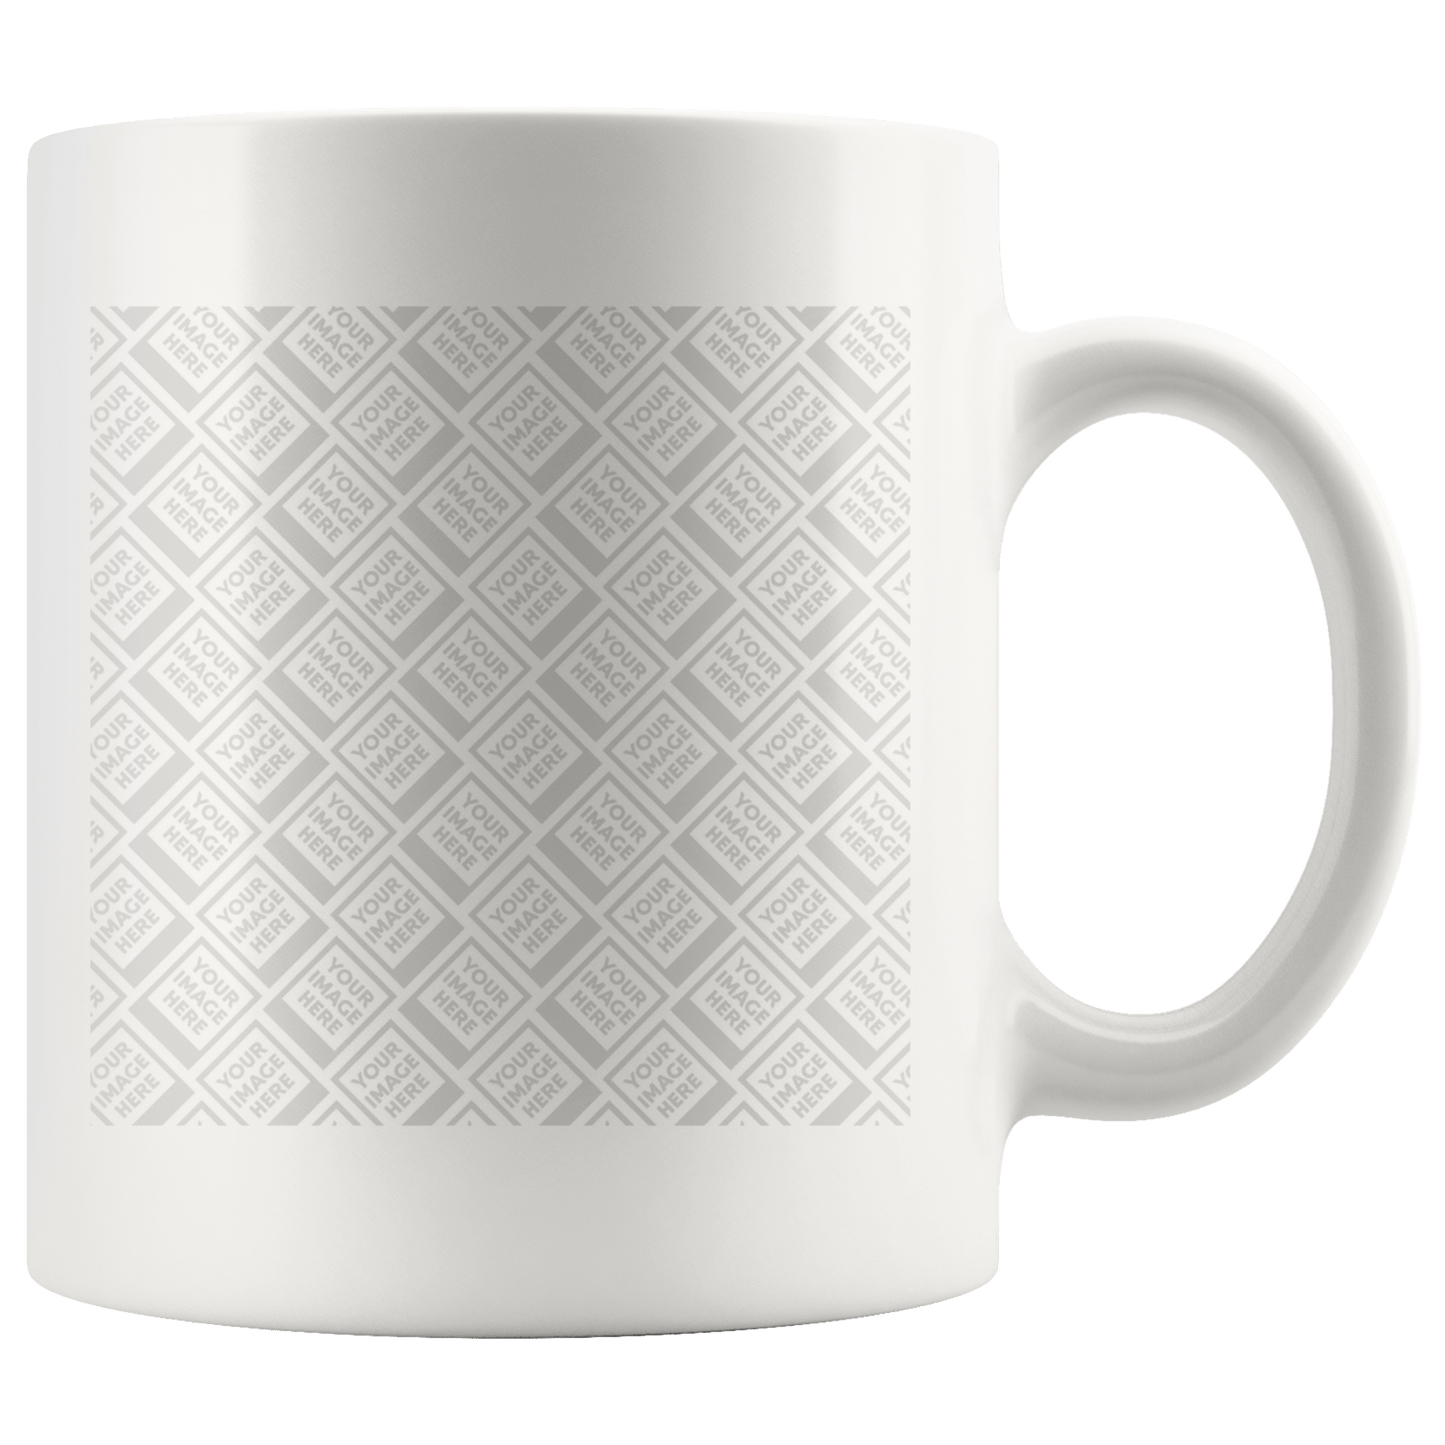 Custom mug personalize coffee mug Gift for Mom Dad Friend personalize gift custom cup